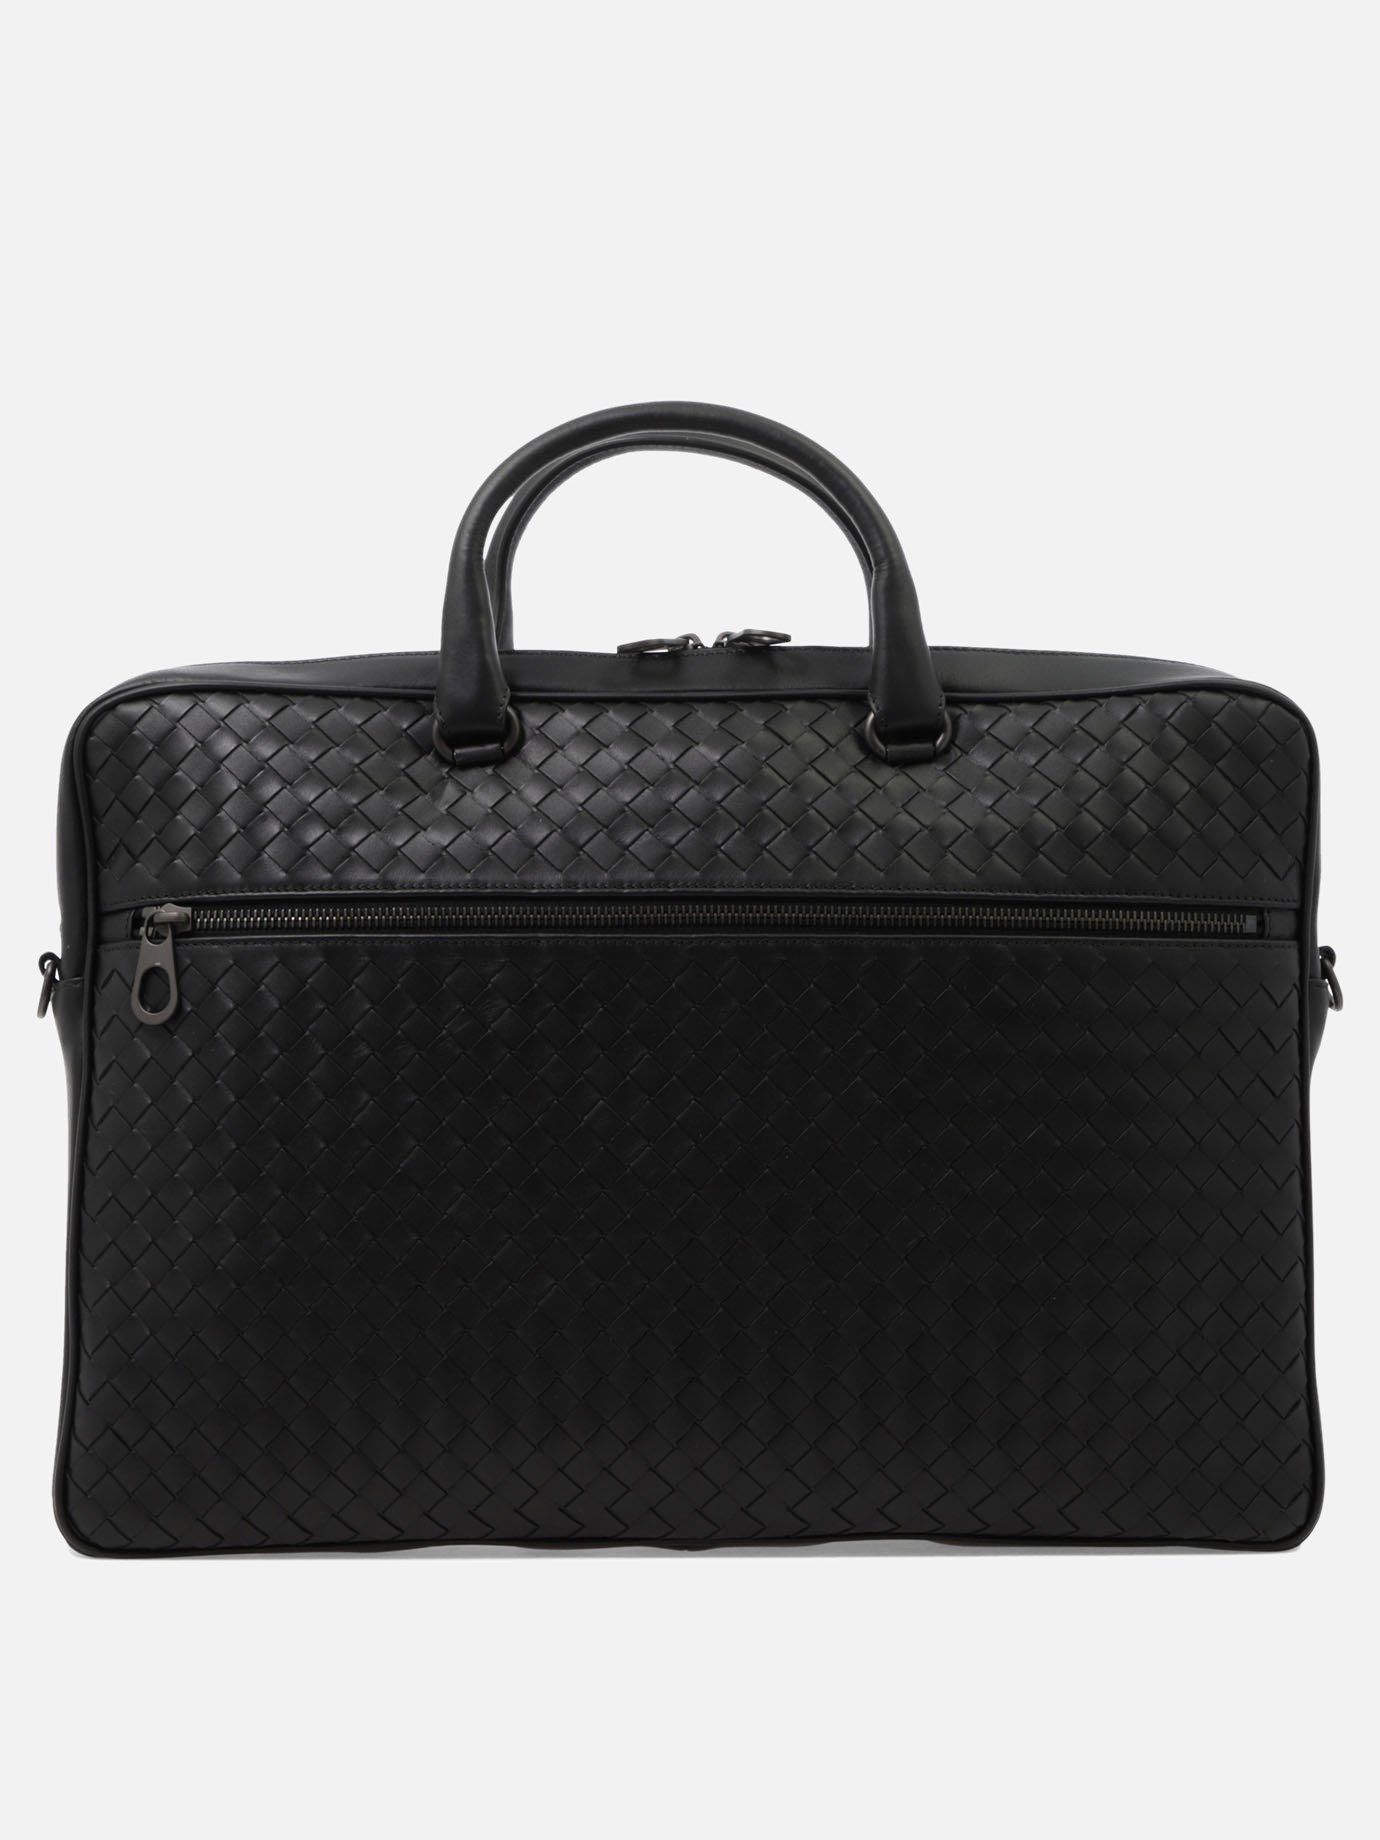 Woven leather handbagby Bottega Veneta - 3